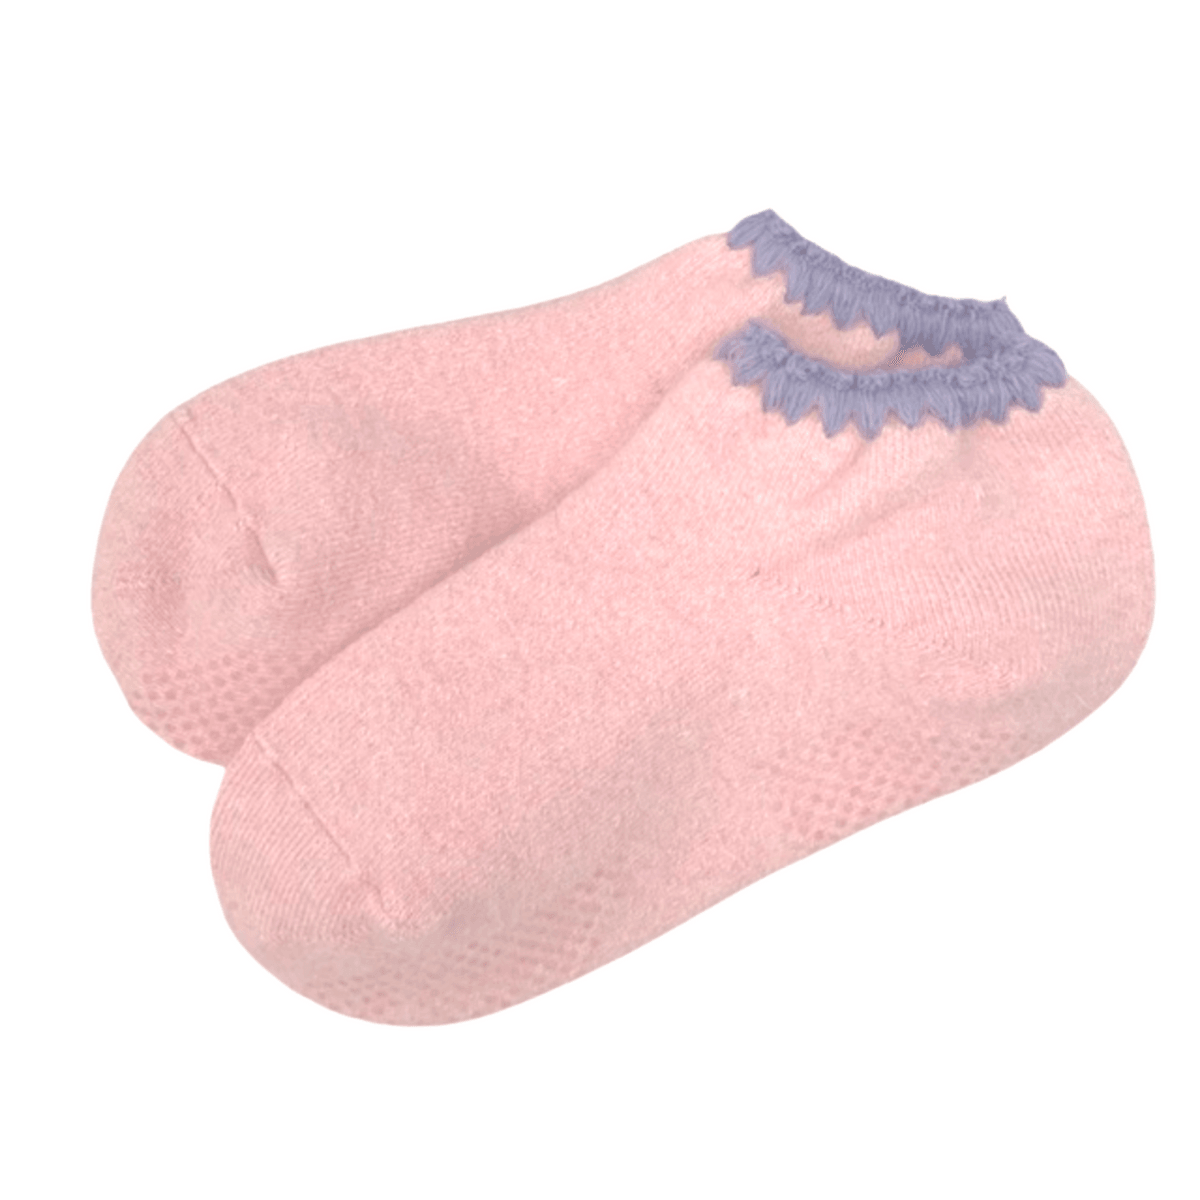 Handcrafted Slipper Socks Silky Angora with Grips - Medium - CherryStone - The Sock Monster